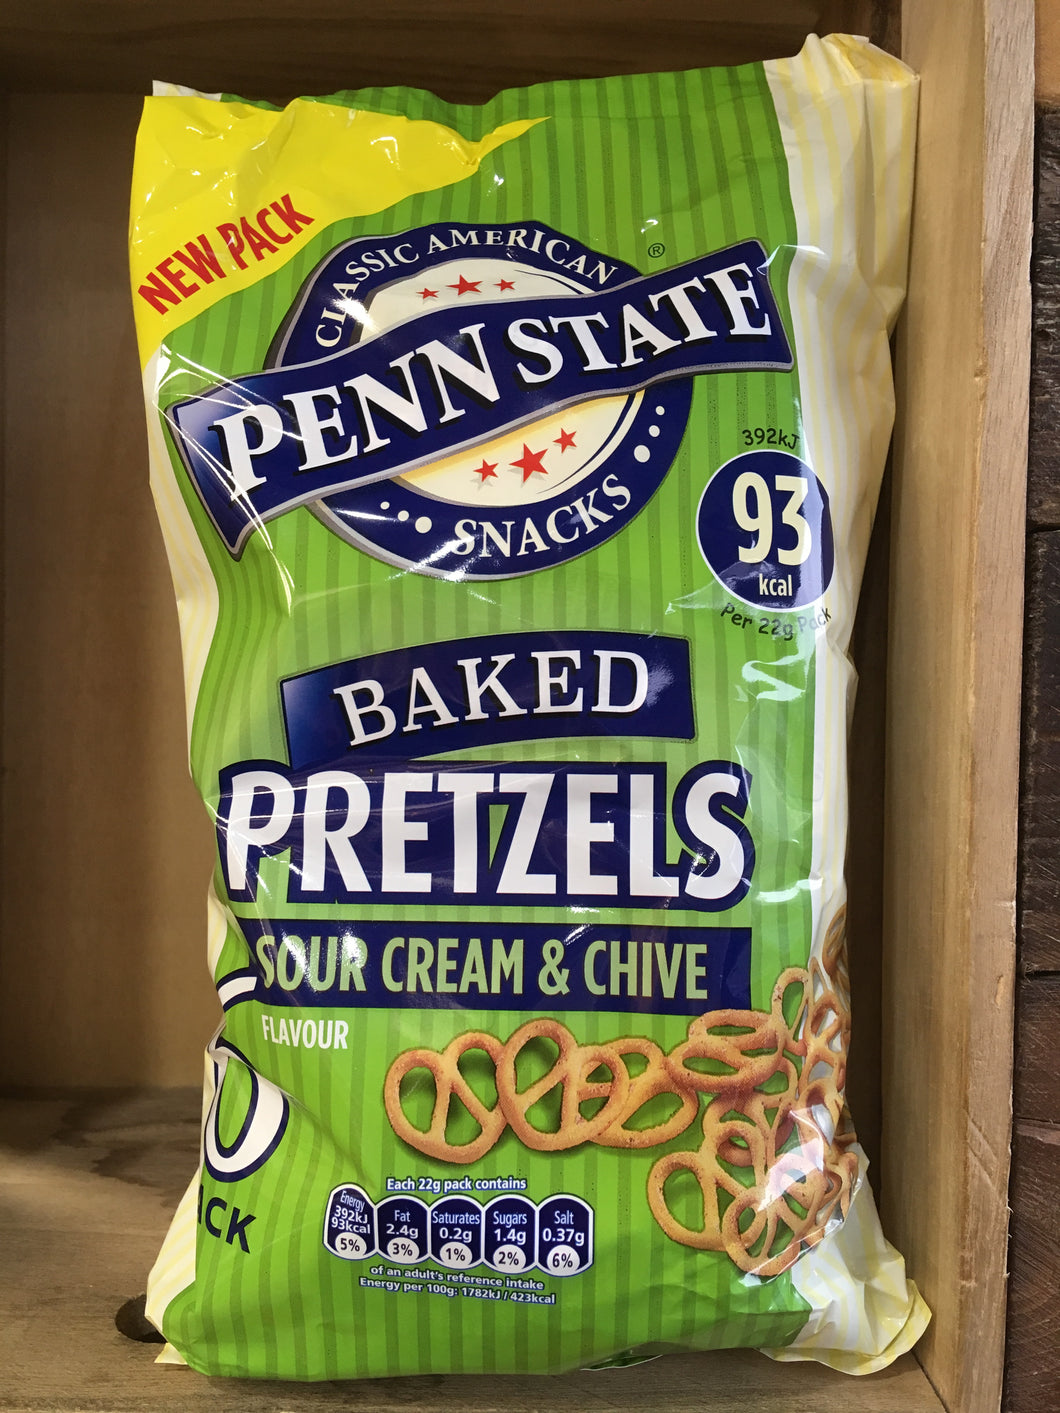 Penn State Sour Cream & Chive Pretzels 6 Pack (6X22g)